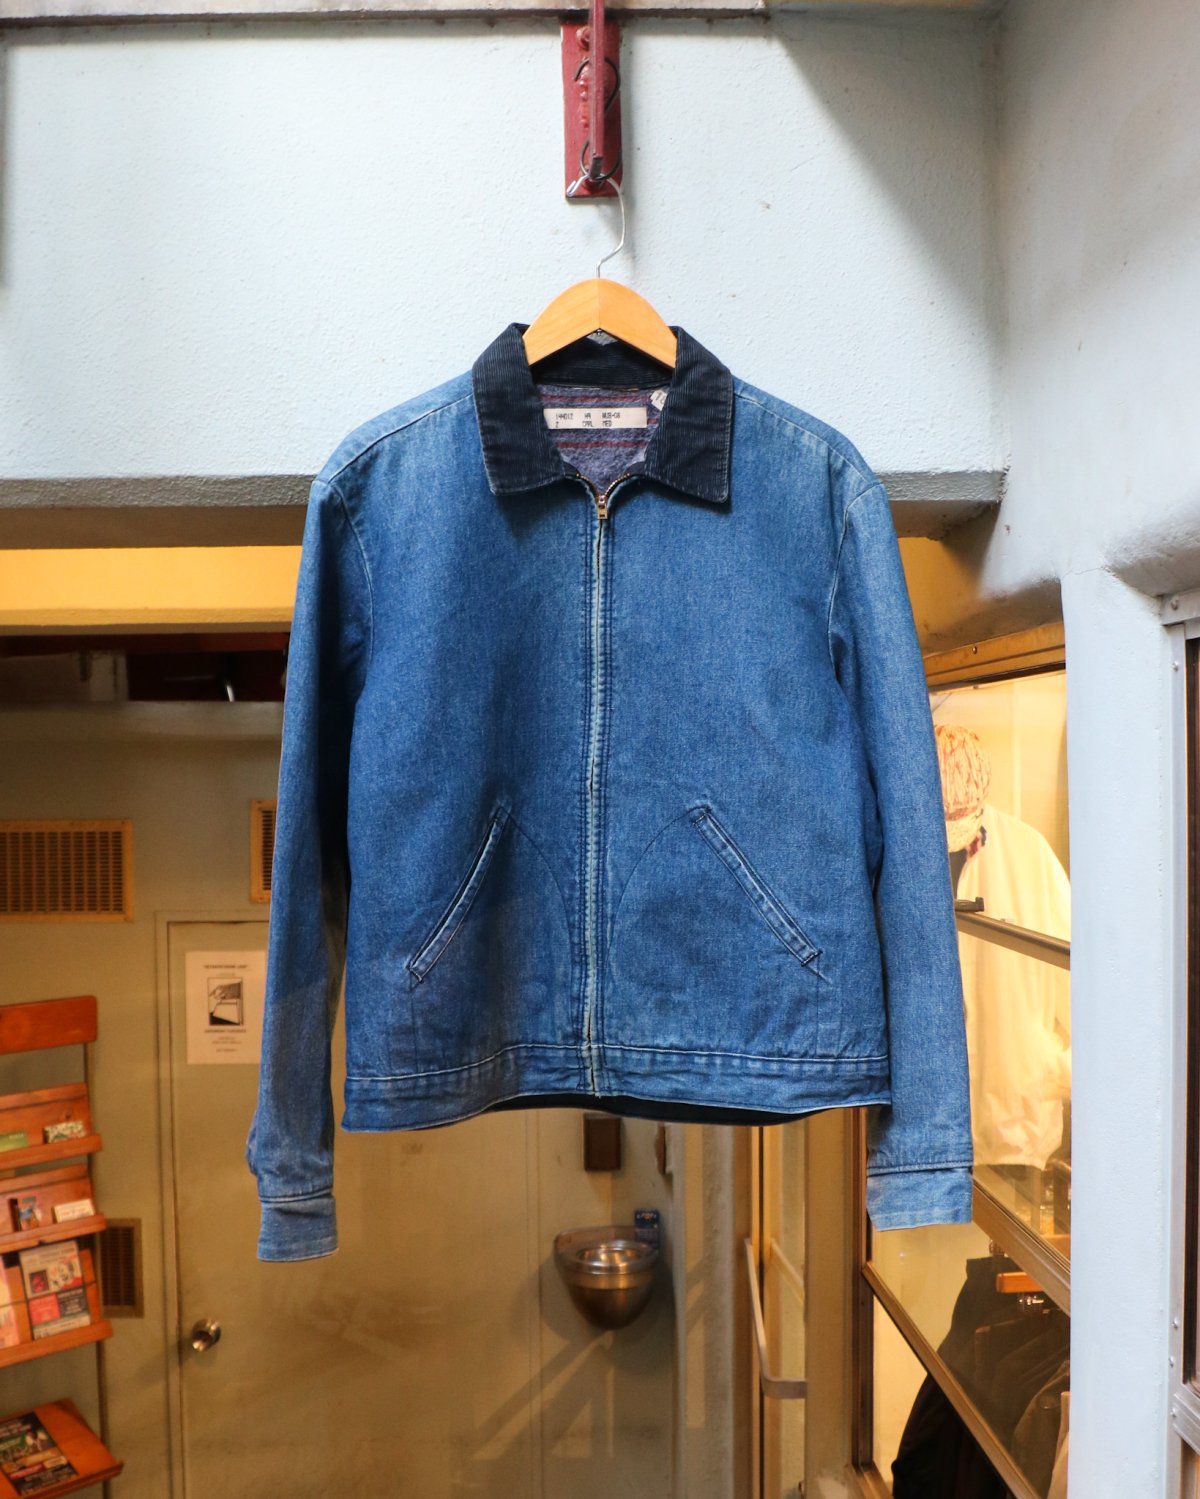 Denim Work Jacket (flannel lined)